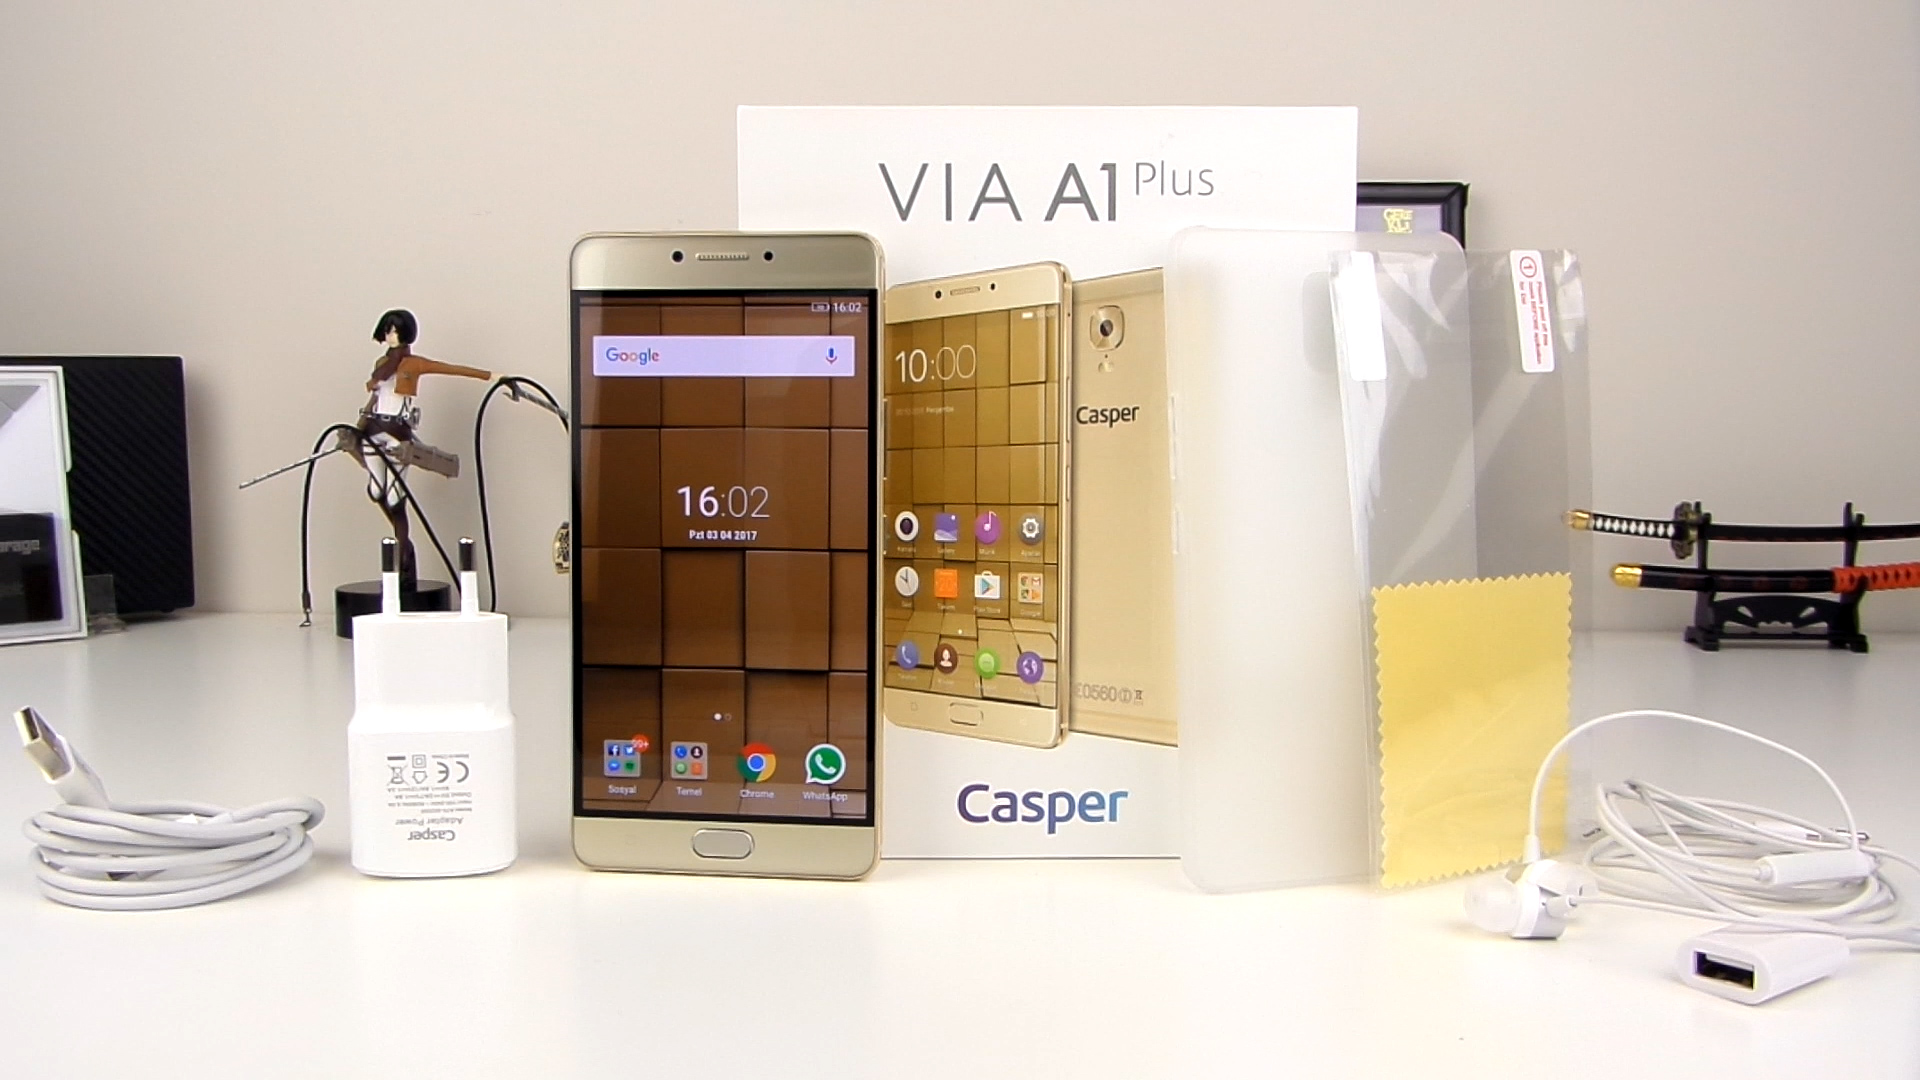 Casper VIA A1 Plus incelemesi '5000mAh batarya ve 128GB depolama'